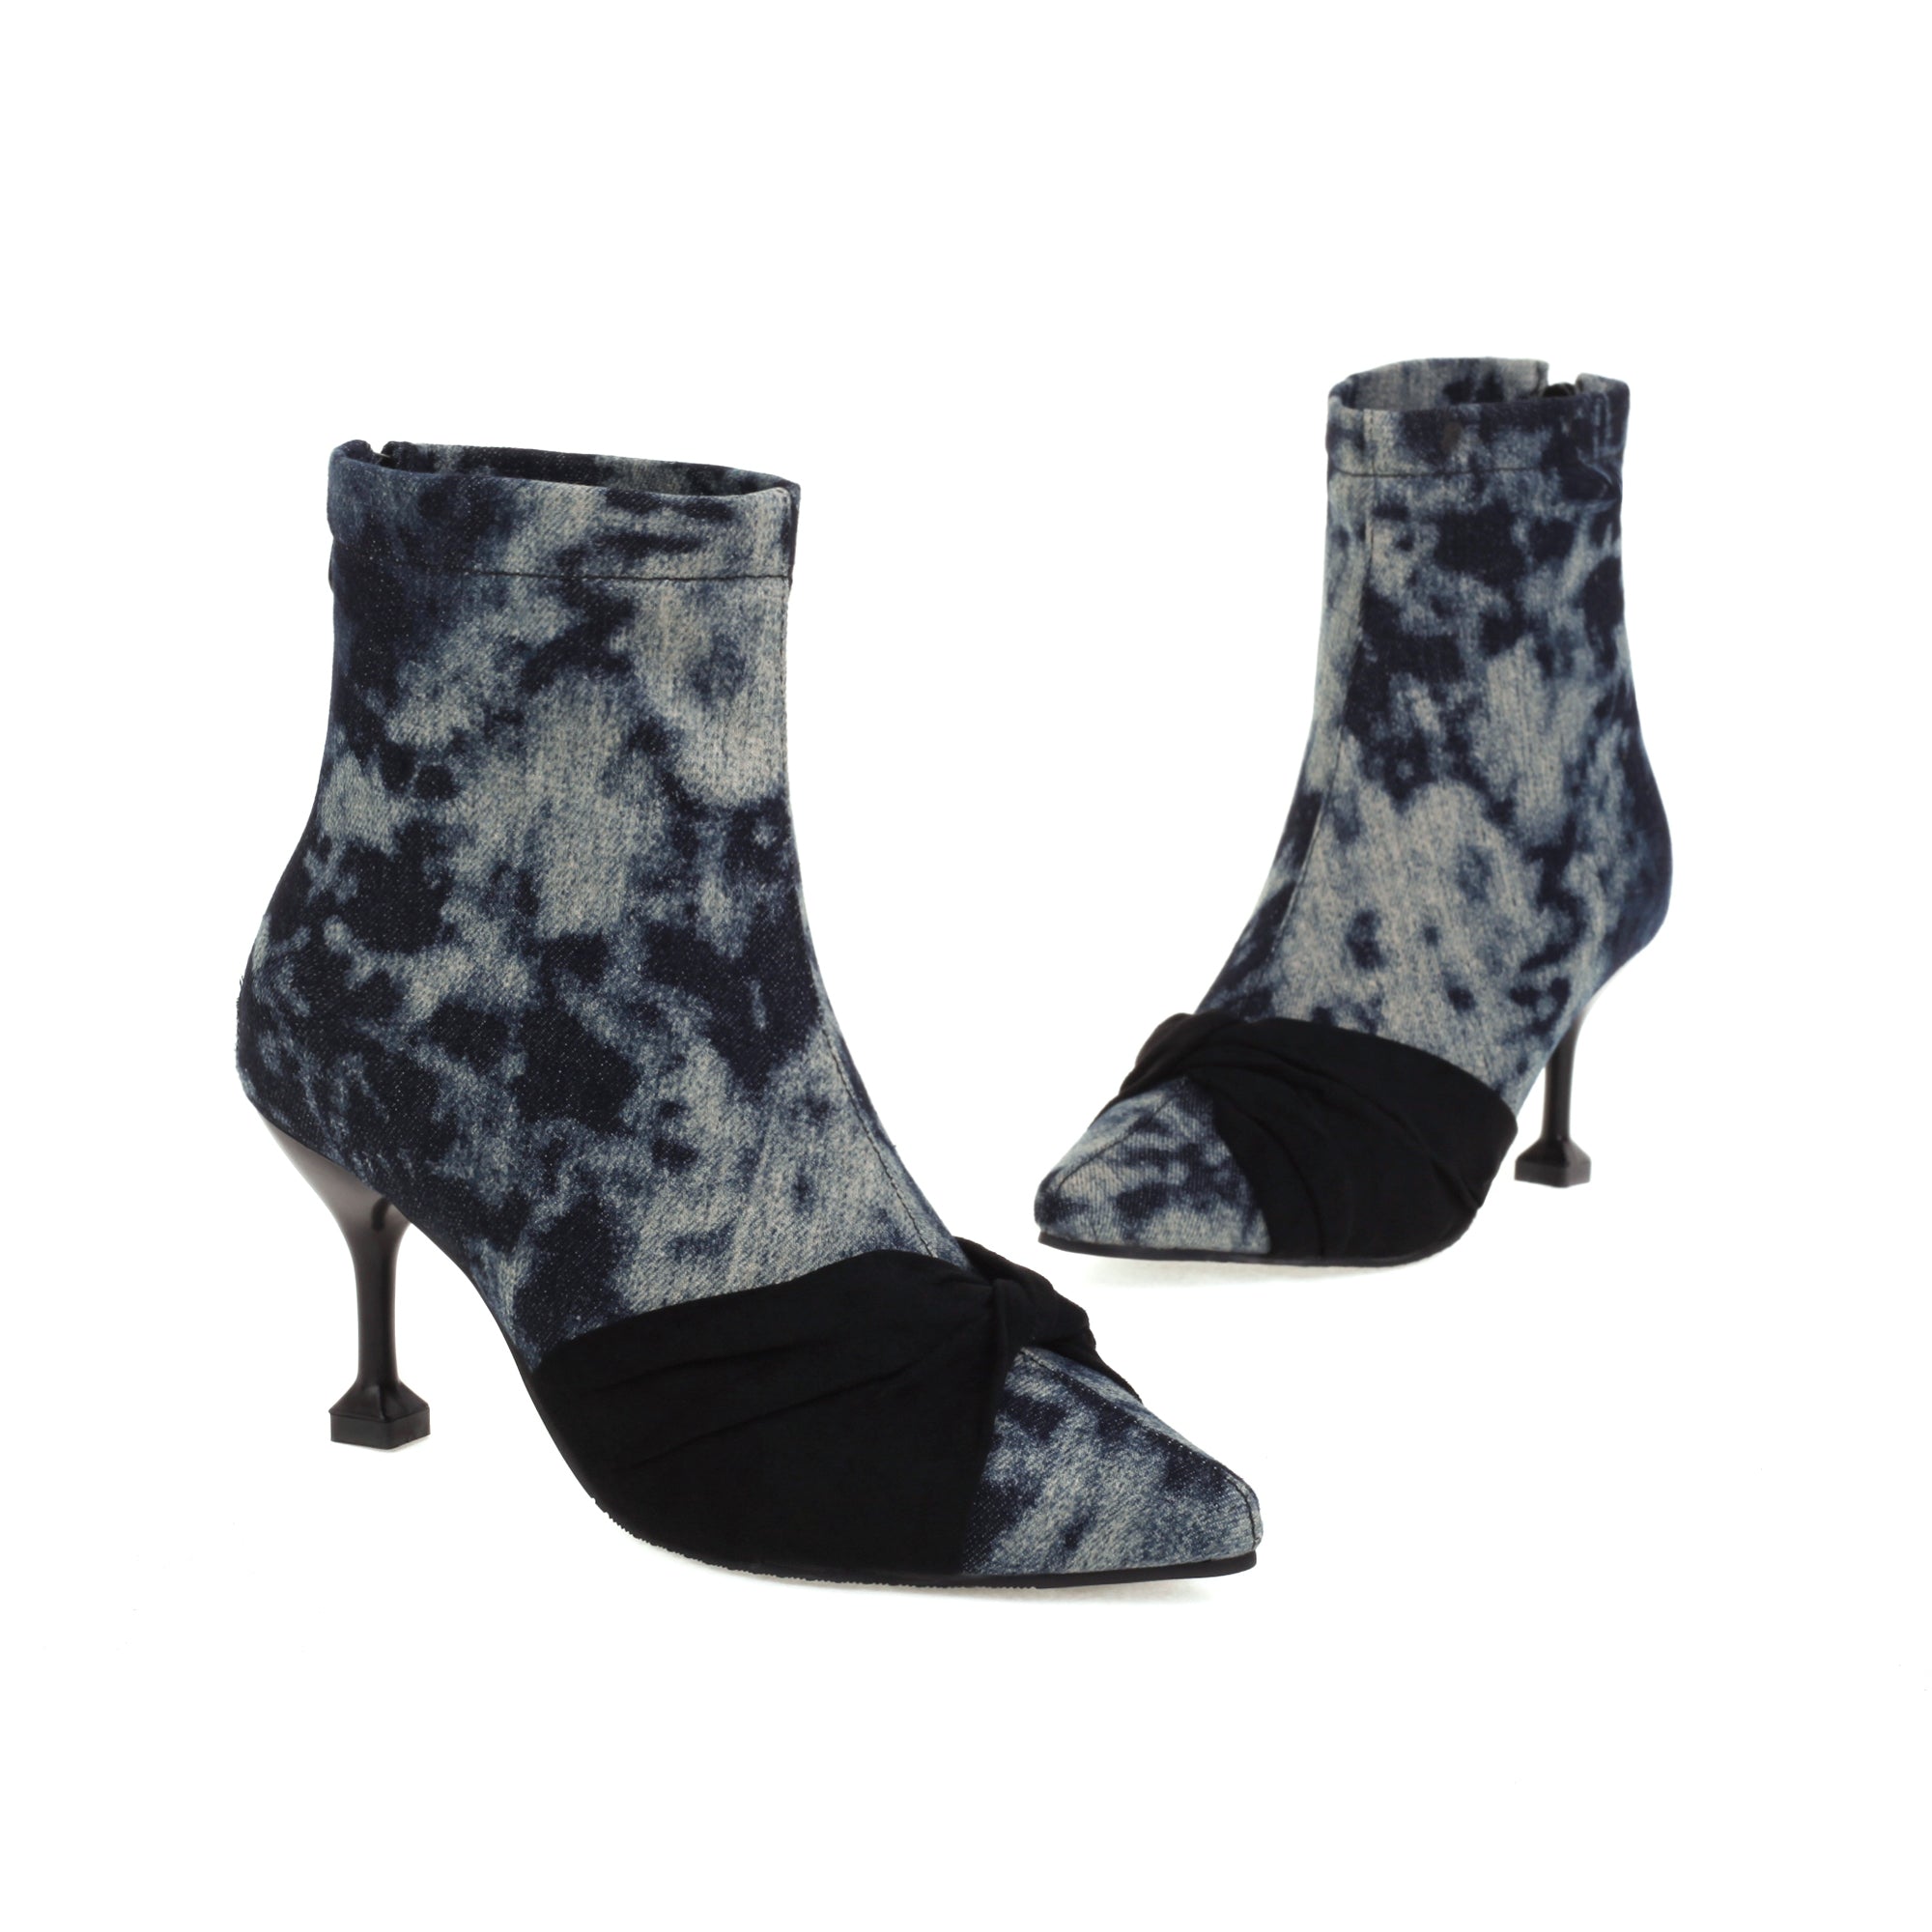 Bigsizeheels Stylish Slip-On Stiletto Heel Pointed Toe Banquet Thin Shoes - Navy blue freeshipping - bigsizeheel®-size5-size15 -All Plus Sizes Available!